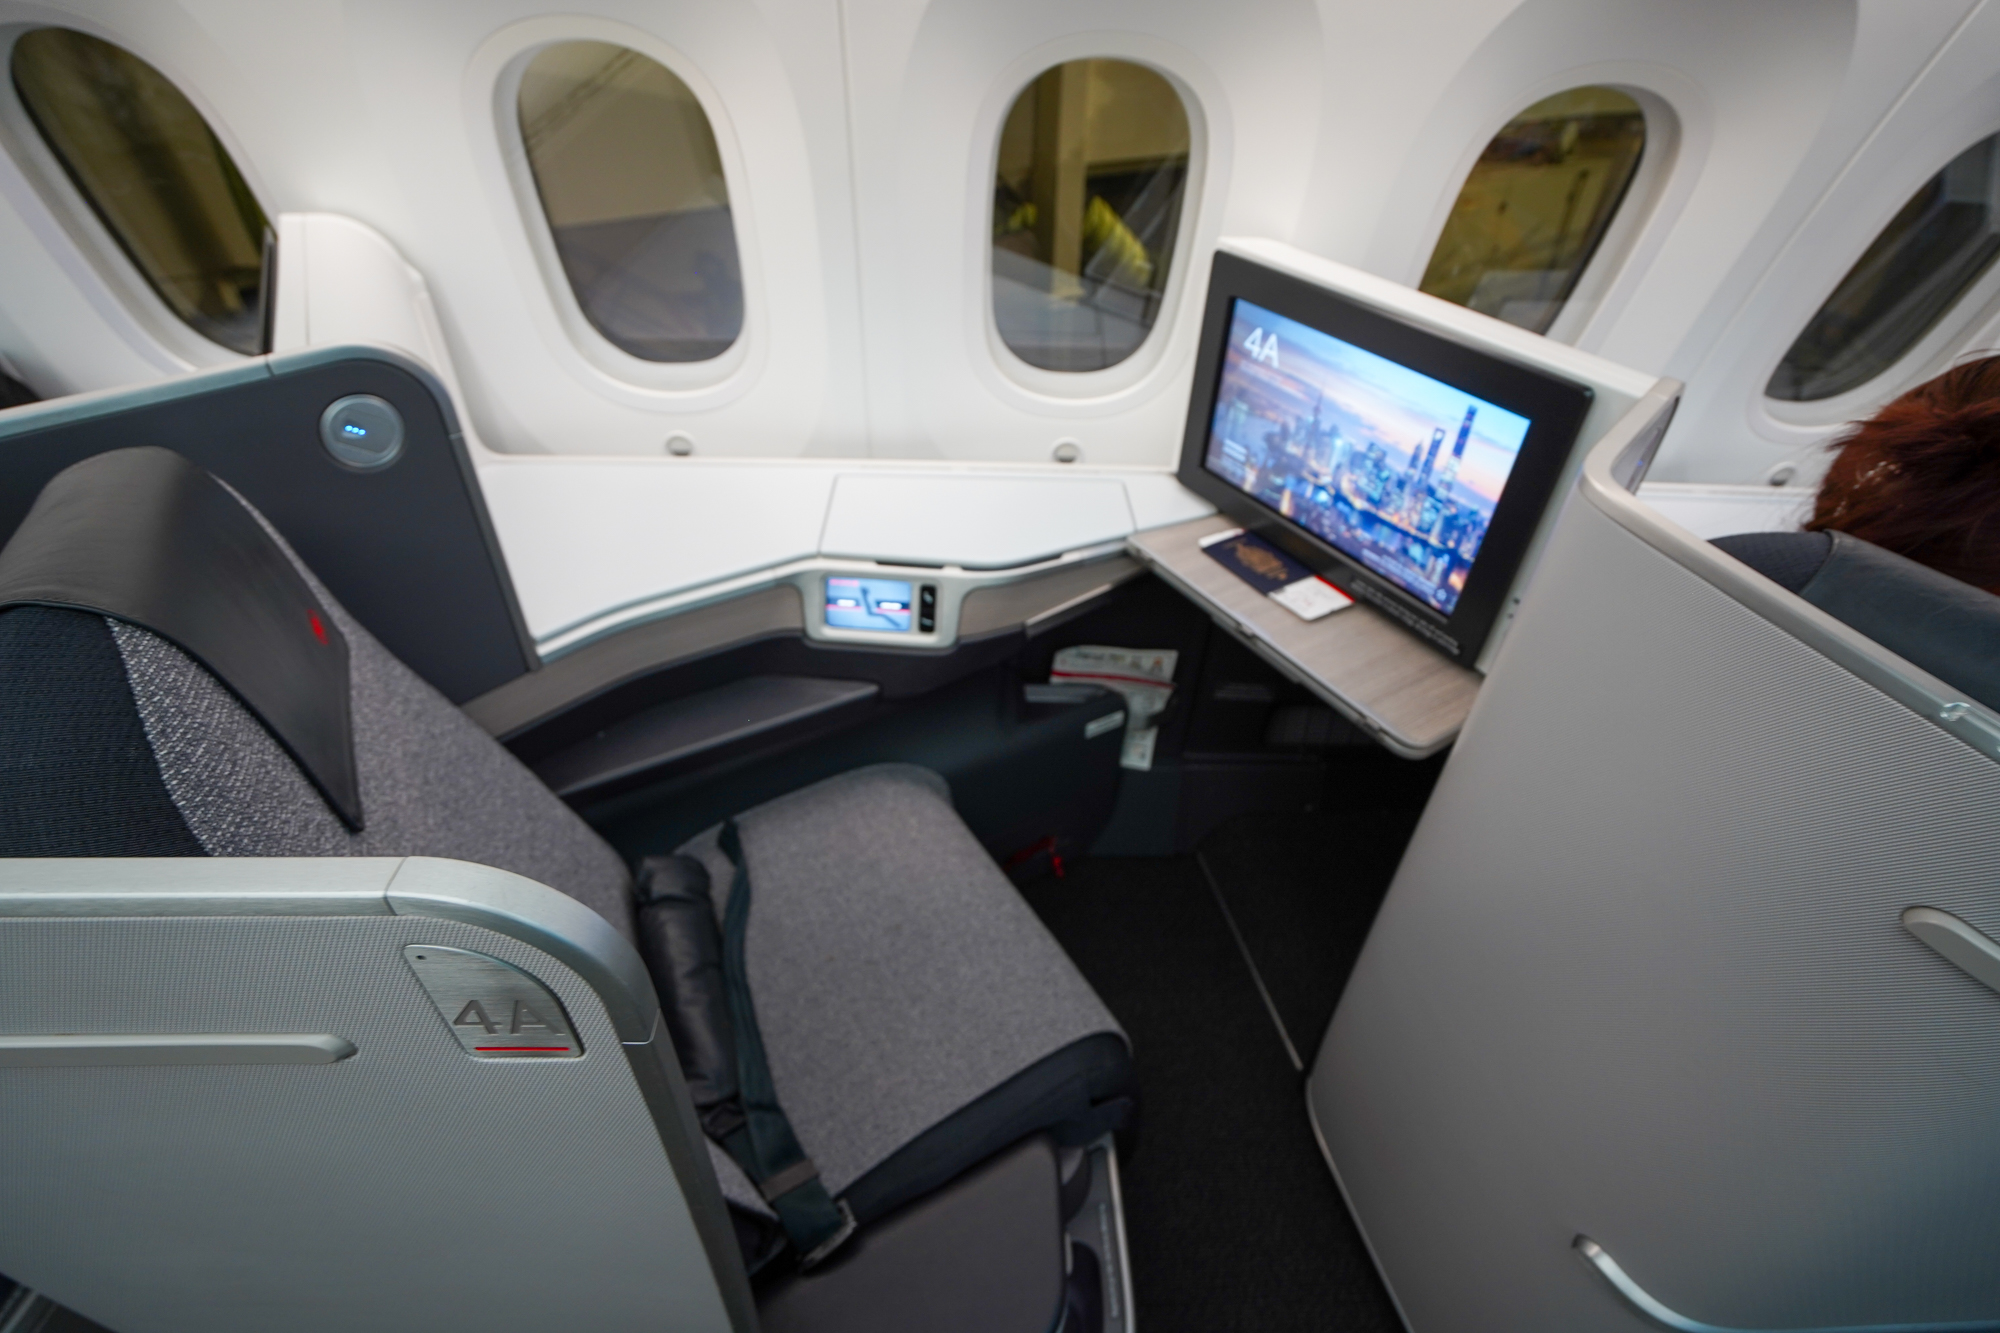 Air Canada 787 business class – Seat 4A